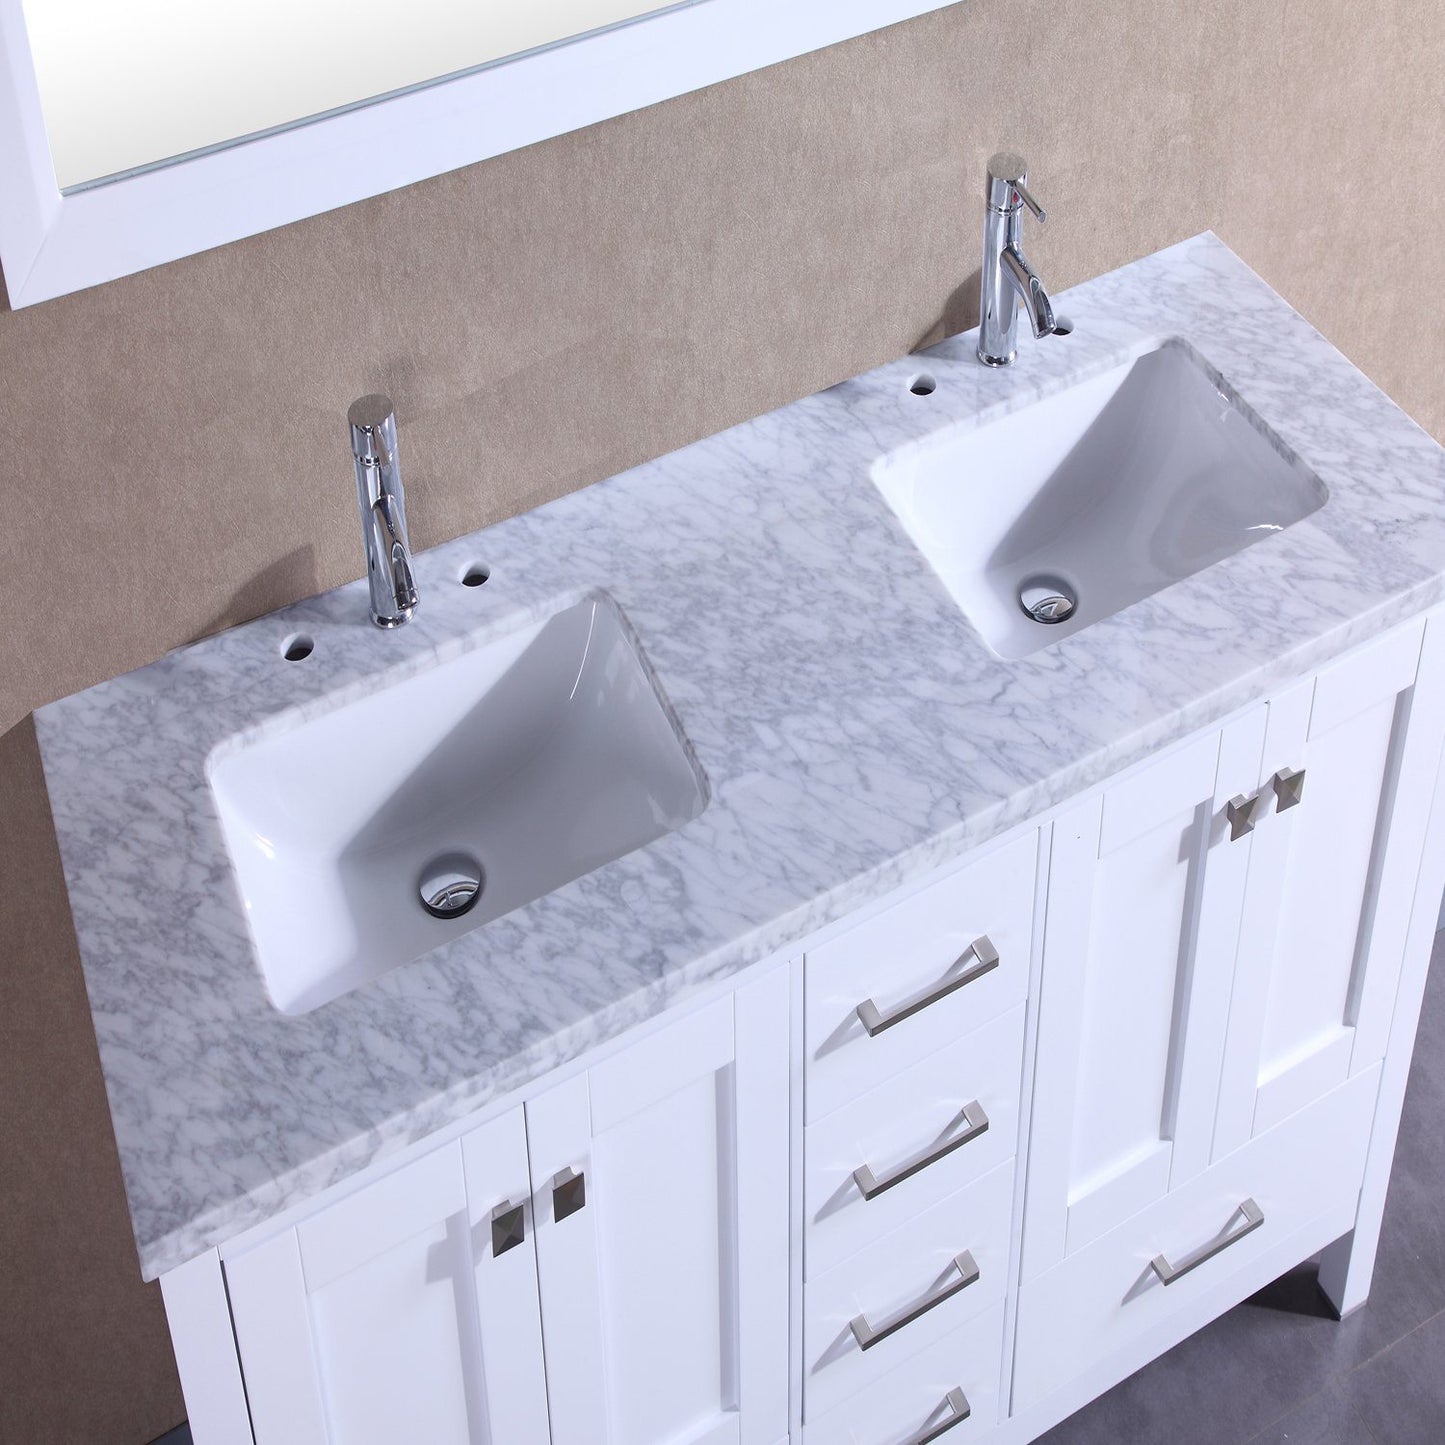 Totti Shaker 60" Transitional White Bathroom Vanity with White Carrera Countertop - Luxe Bathroom Vanities Luxury Bathroom Fixtures Bathroom Furniture